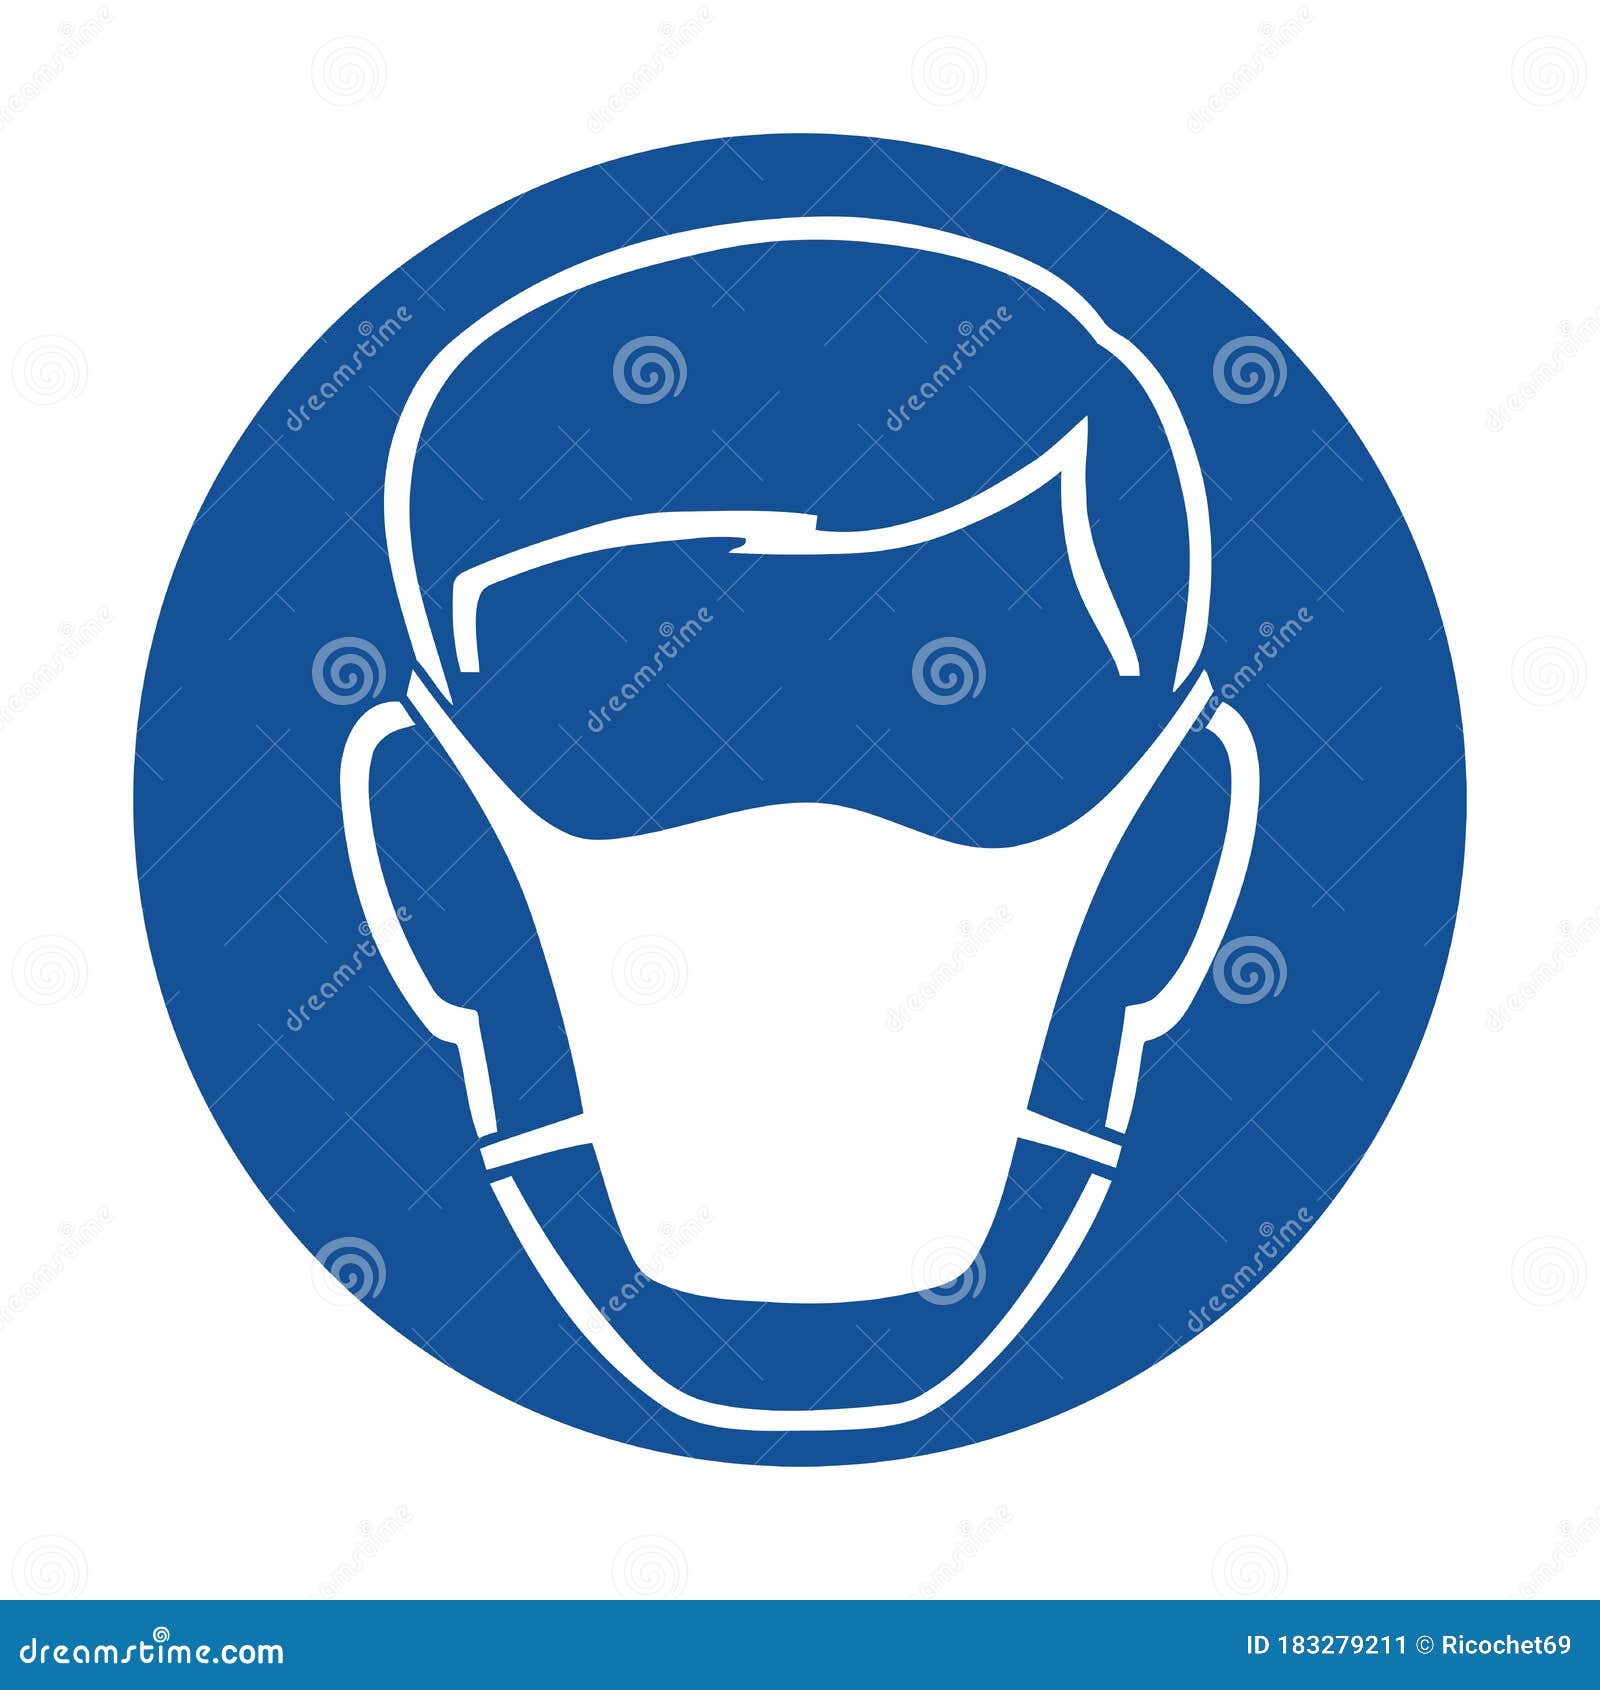 wear mask safety pictogram